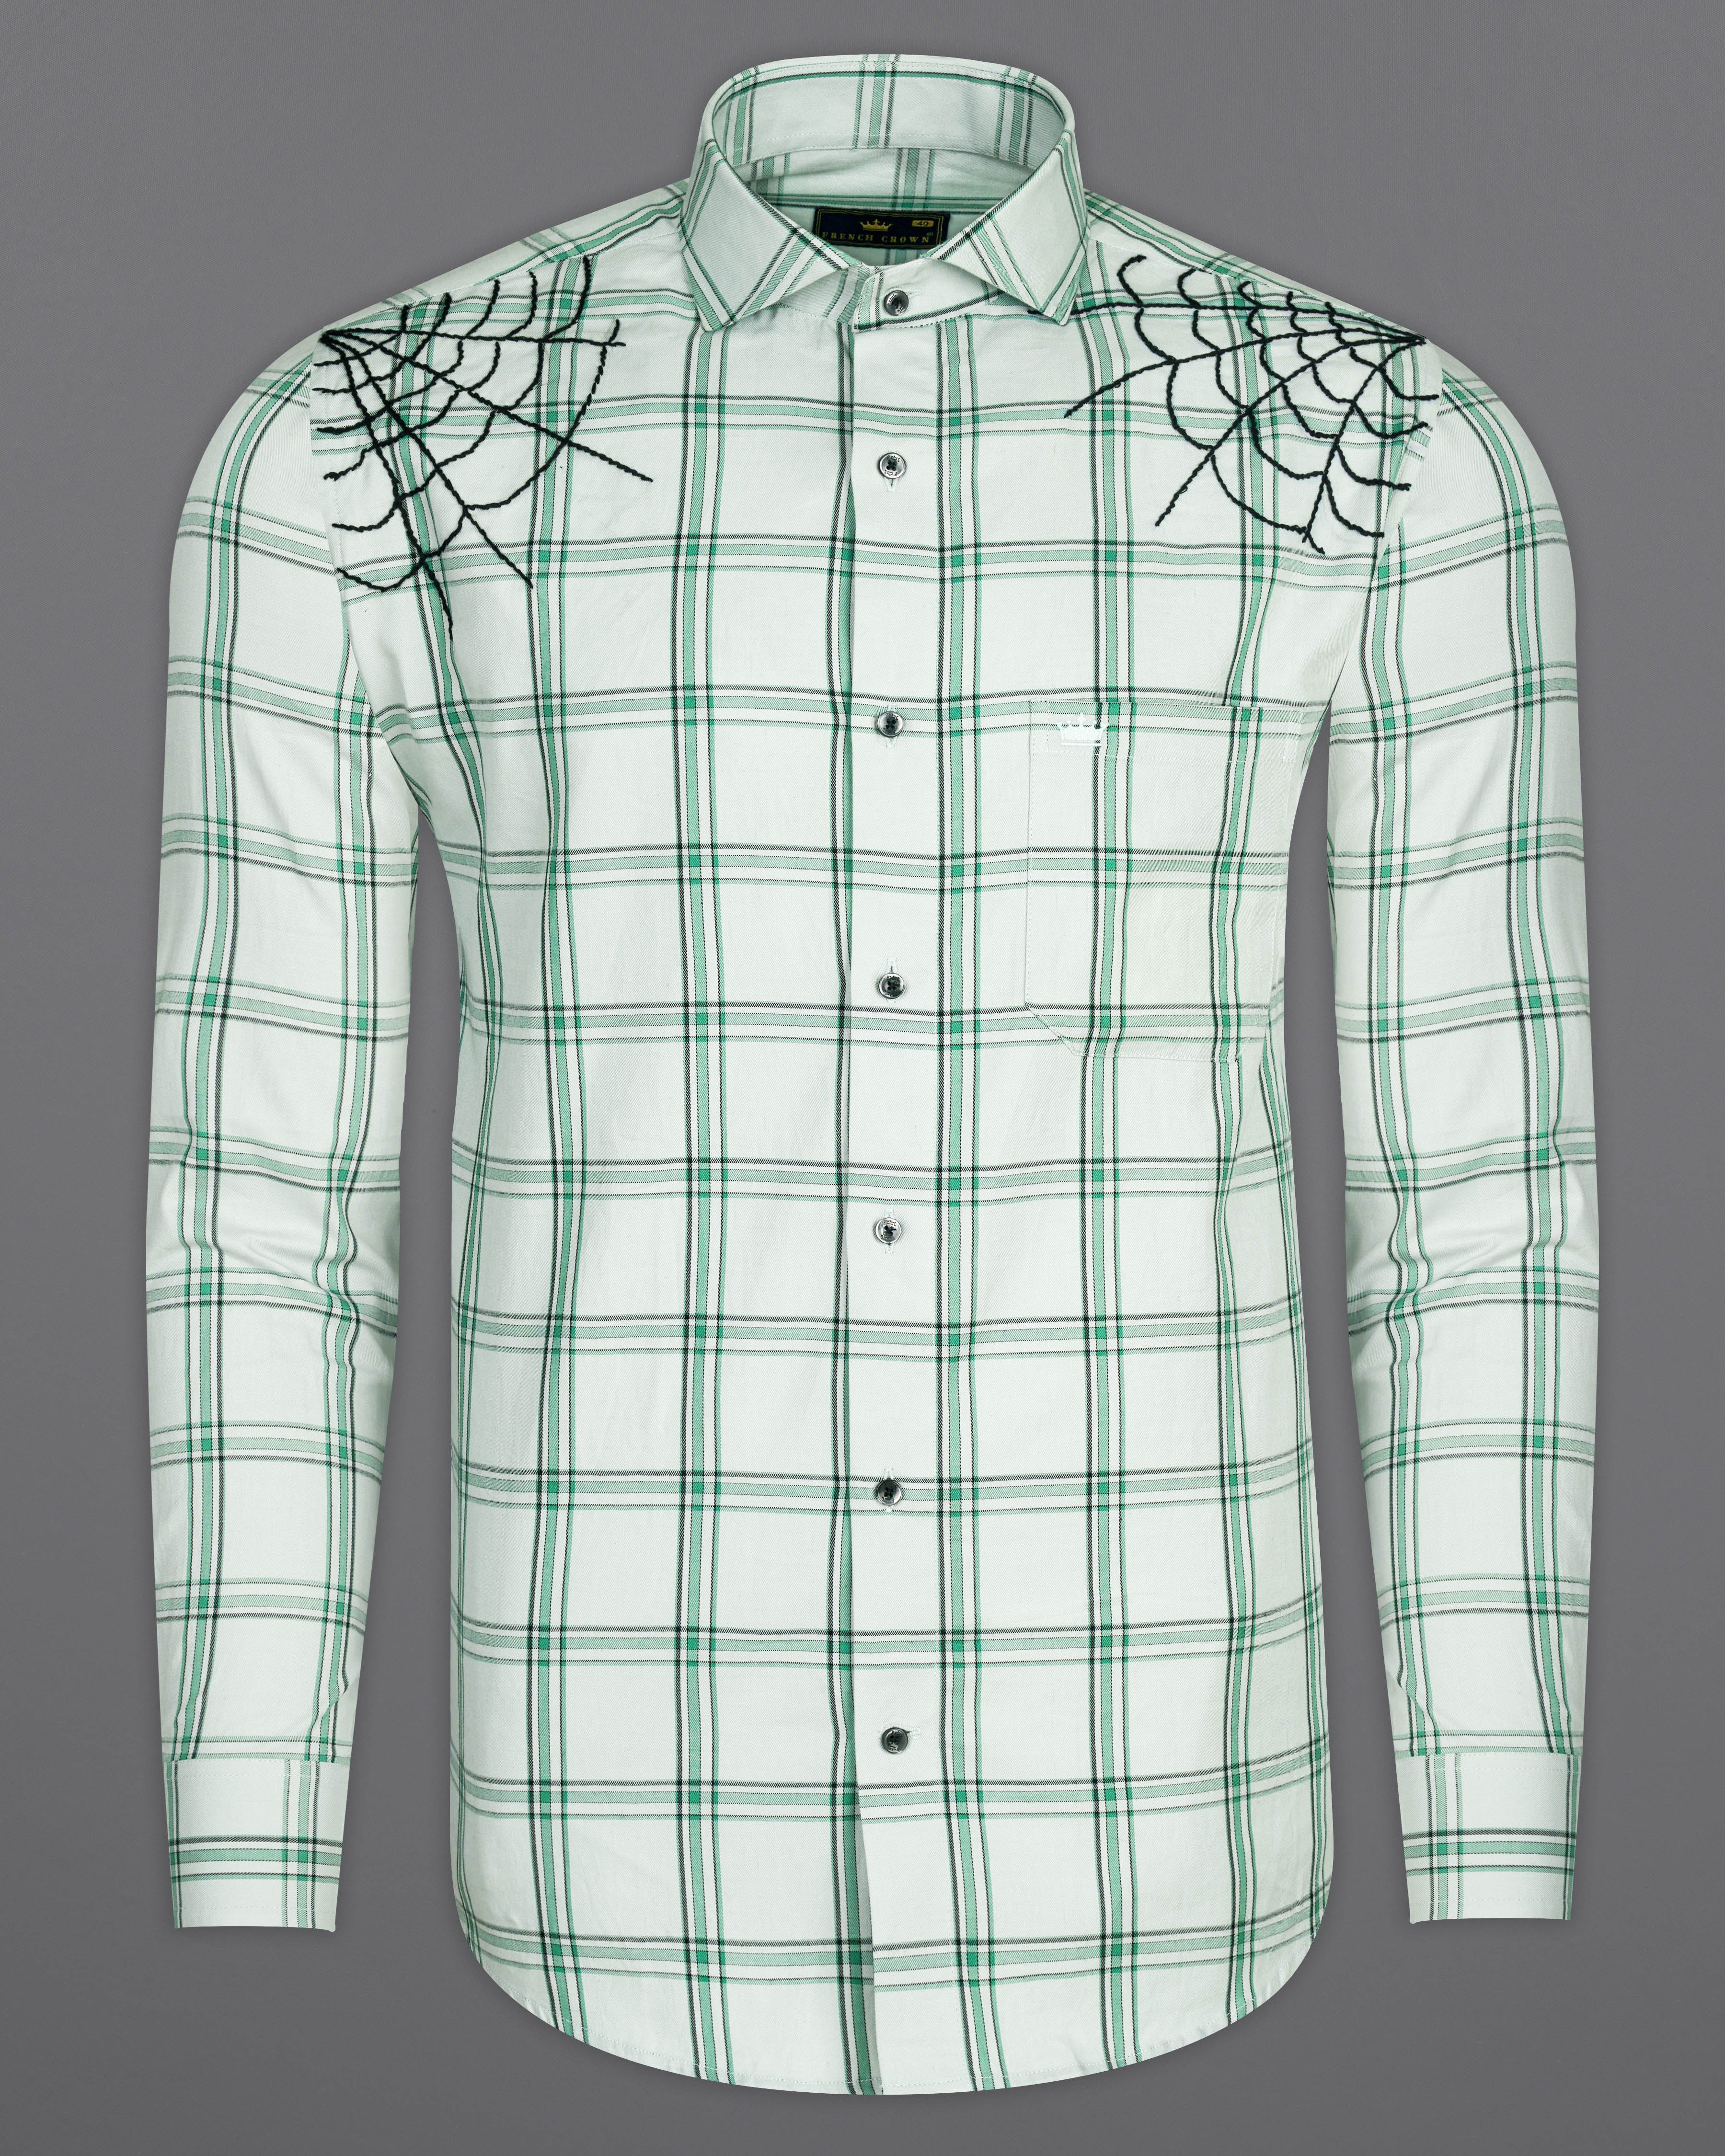 Iron Gray With Green Twill Checkered Premium Cotton Web Hand Embroidered Designer Shirt 6351-CA-BLK-EH063-38, 6351-CA-BLK-EH063-H-38, 6351-CA-BLK-EH063-39, 6351-CA-BLK-EH063-H-39, 6351-CA-BLK-EH063-40, 6351-CA-BLK-EH063-H-40, 6351-CA-BLK-EH063-42, 6351-CA-BLK-EH063-H-42, 6351-CA-BLK-EH063-44, 6351-CA-BLK-EH063-H-44, 6351-CA-BLK-EH063-46, 6351-CA-BLK-EH063-H-46, 6351-CA-BLK-EH063-48, 6351-CA-BLK-EH063-H-48, 6351-CA-BLK-EH063-50, 6351-CA-BLK-EH063-H-50, 6351-CA-BLK-EH063-52, 6351-CA-BLK-EH063-H-52